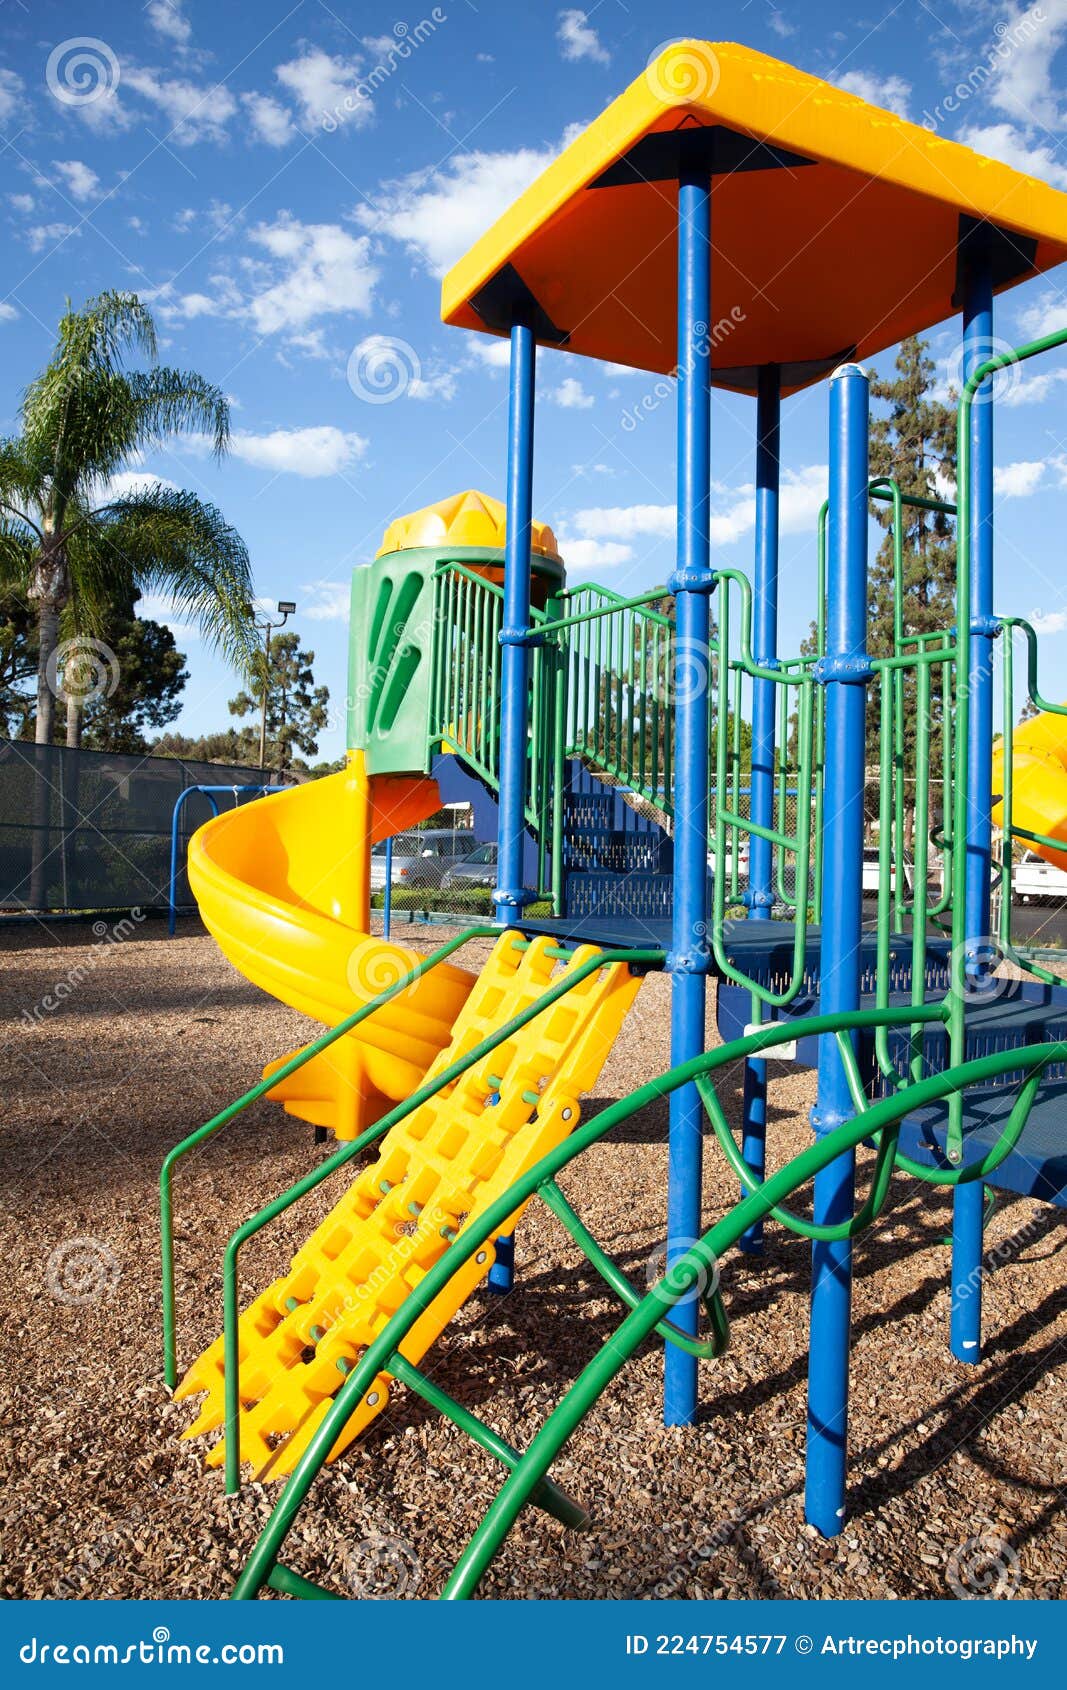 https://thumbs.dreamstime.com/z/moderno-y-colorido-parque-infantil-oscila-entre-escaleras-zona-exterior-de-juegos-pl%C3%A1stico-para-ni%C3%B1os-224754577.jpg